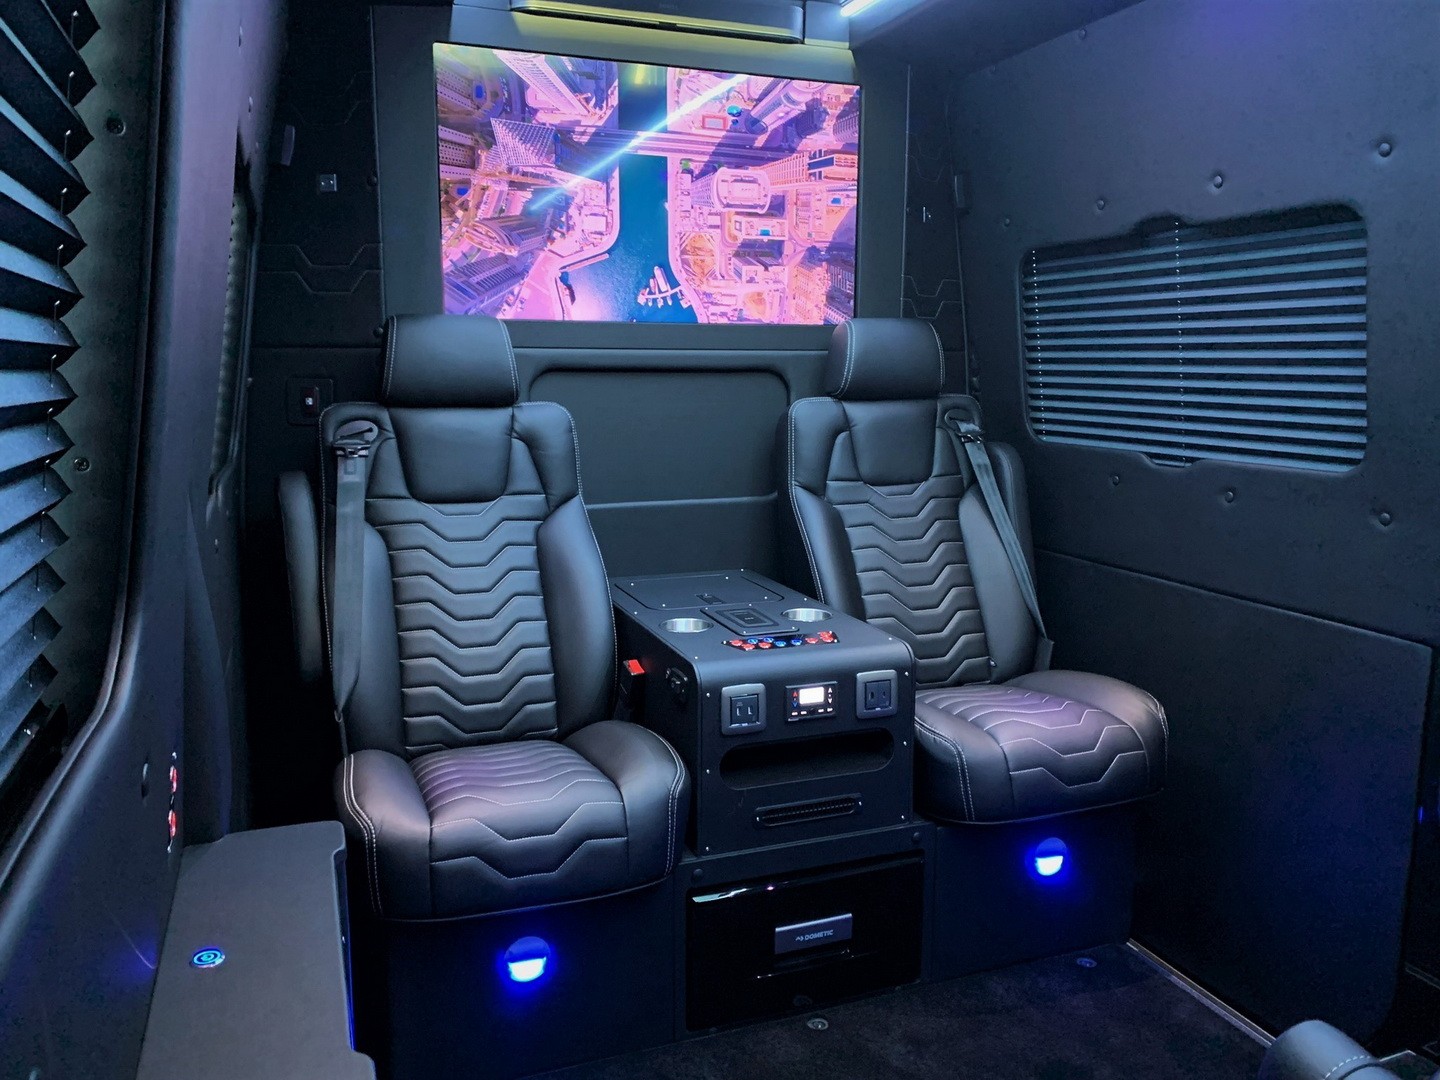 MERCEDES-BENZ SPRINTER Luxury VIP Conversion - V-Class luxury